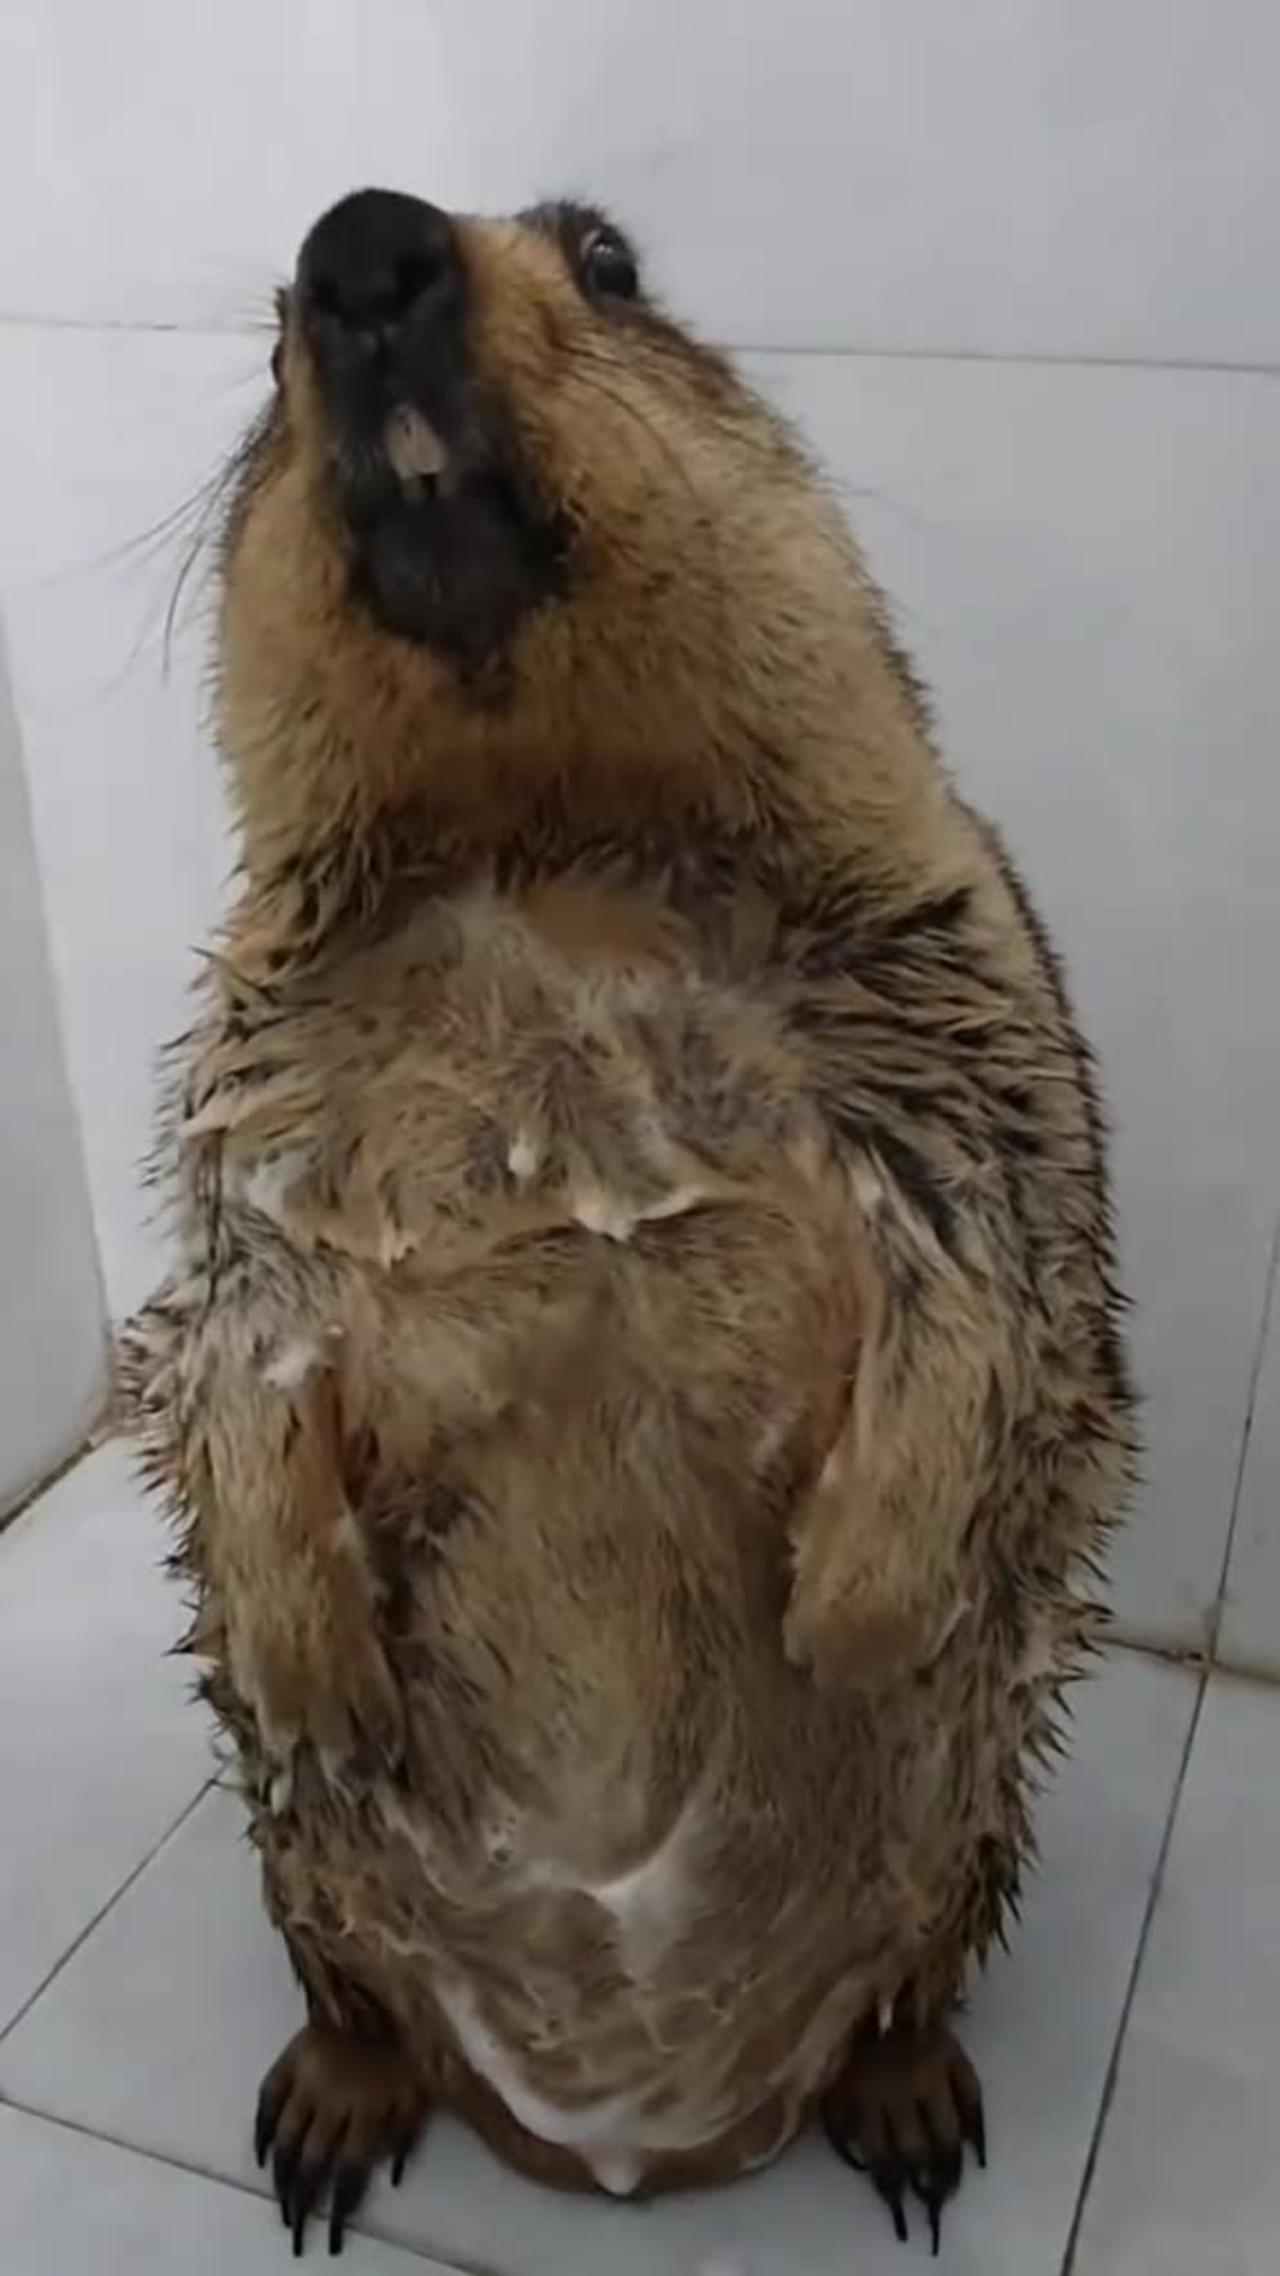 Marmot bathing 😁